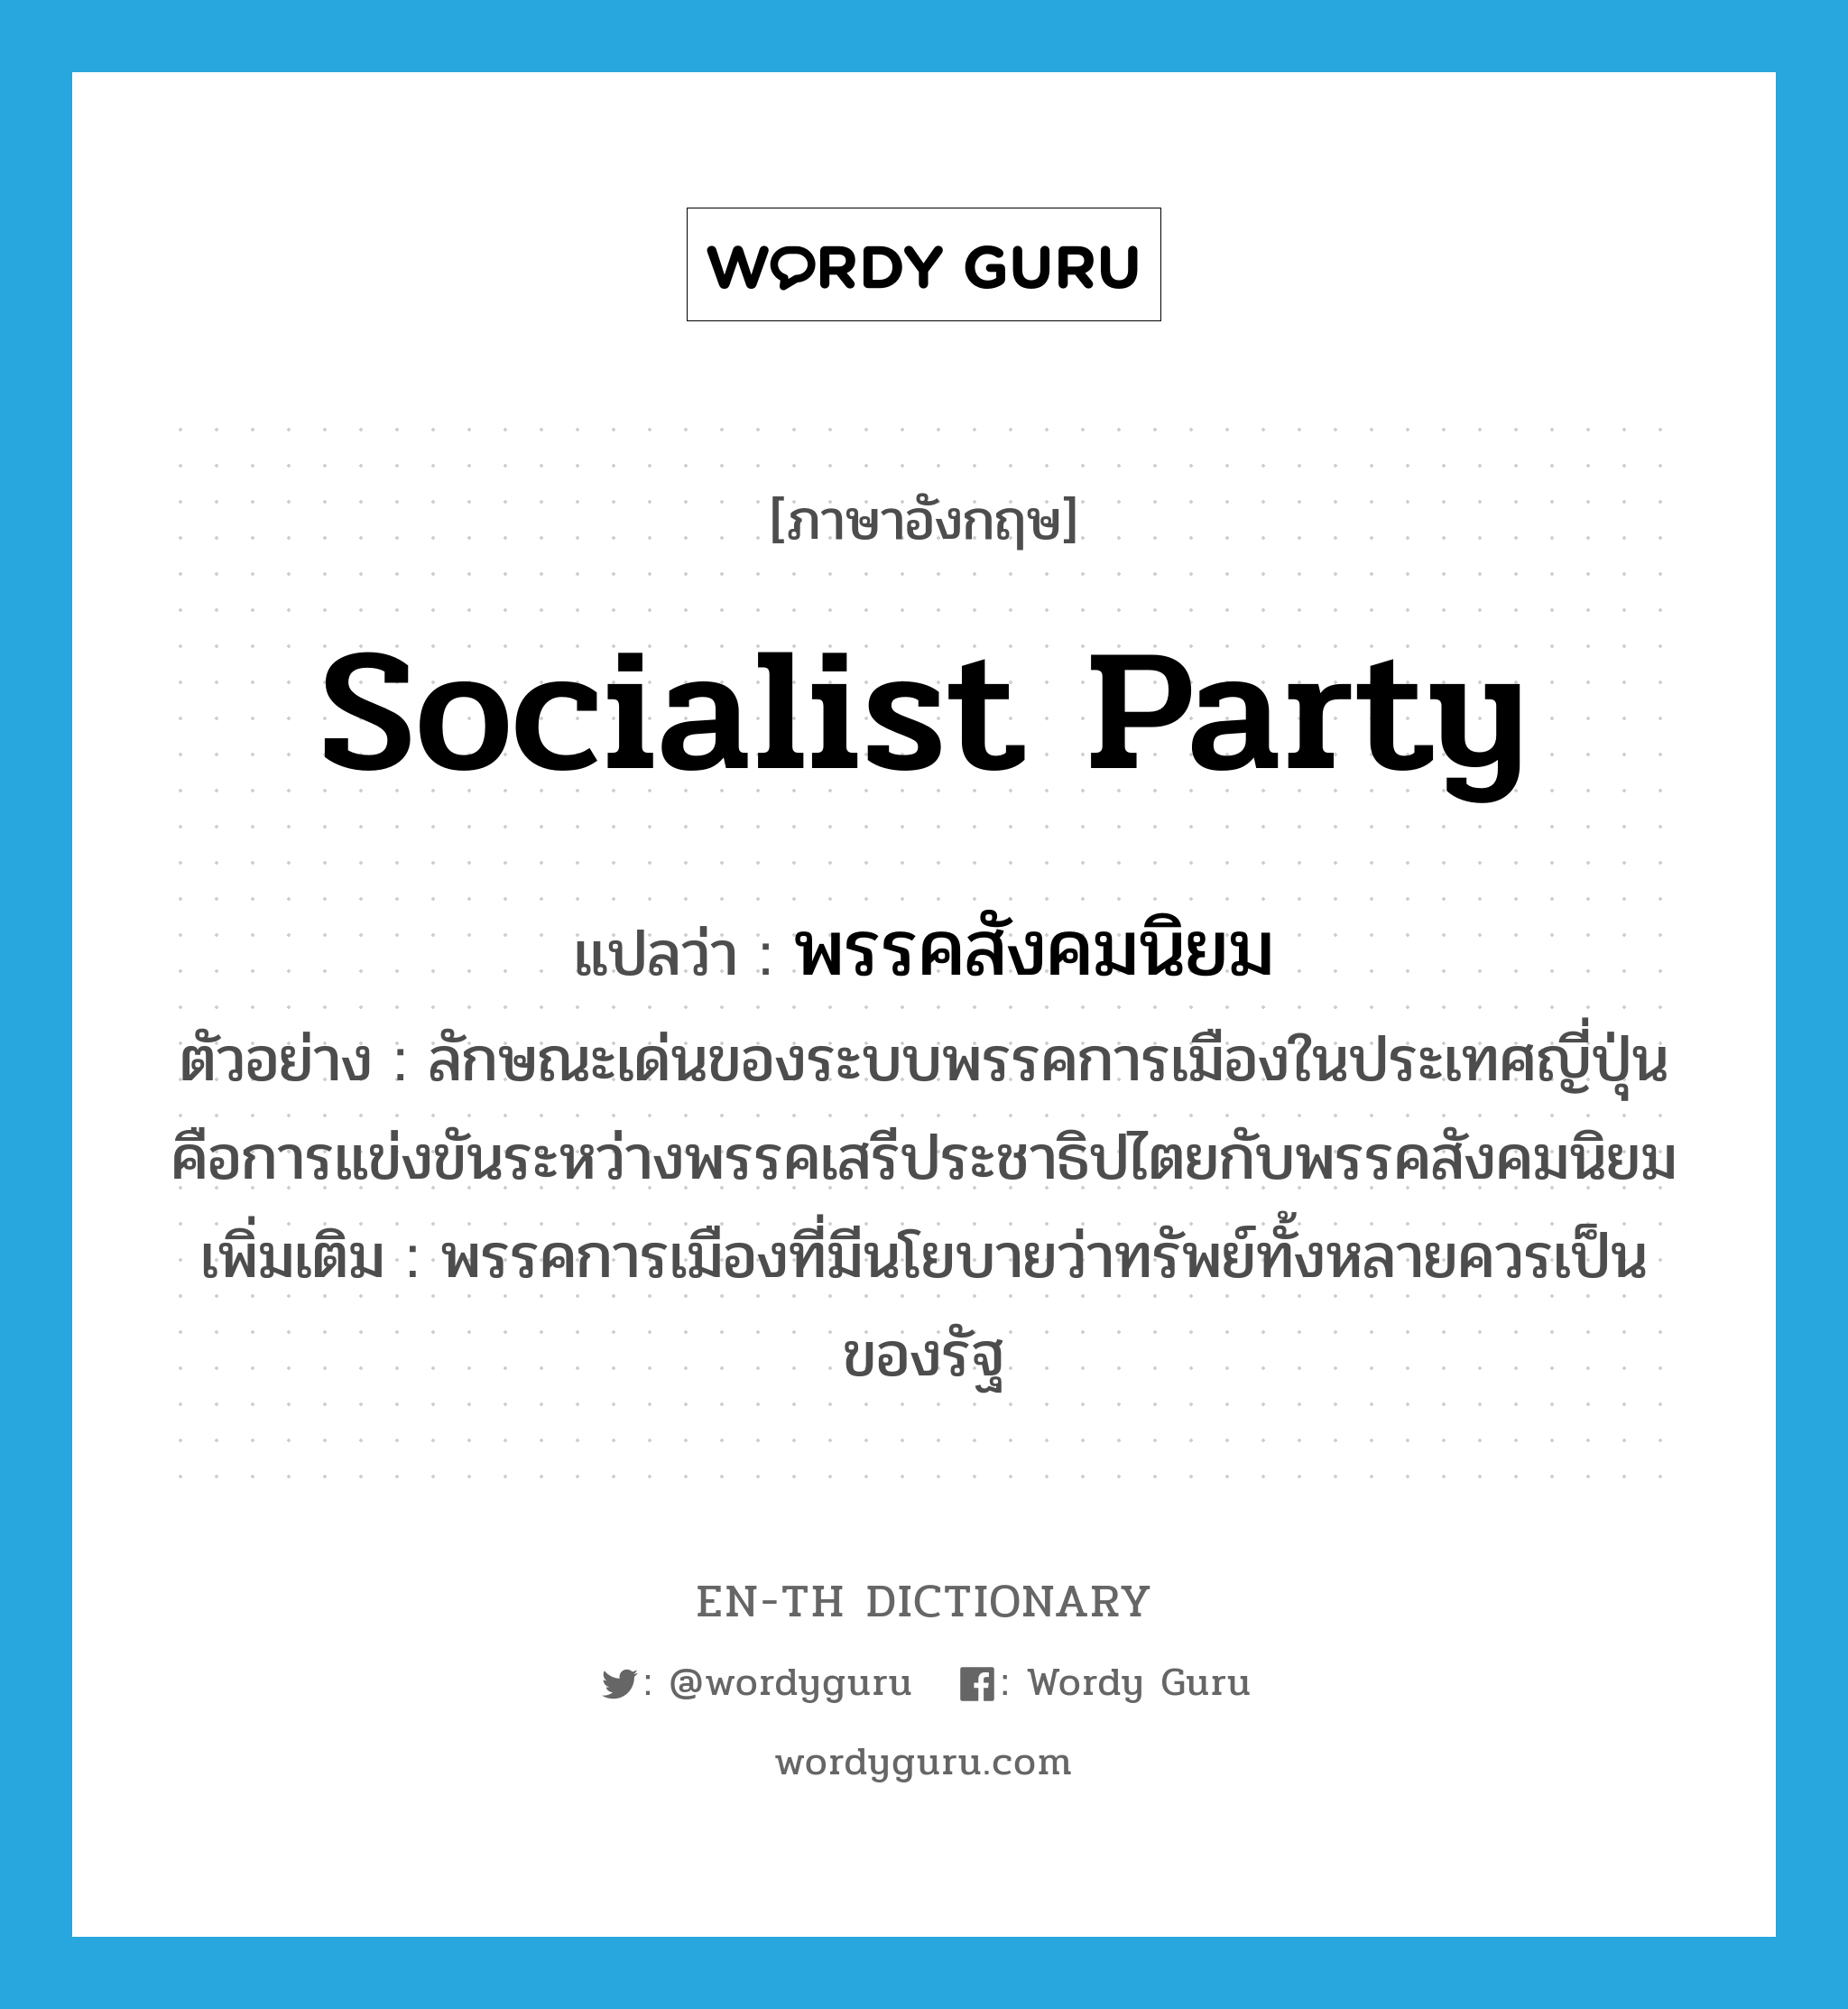 socialist party แปลว่า?, คำศัพท์ภาษาอังกฤษ socialist party แปลว่า พรรคสังคมนิยม ประเภท N ตัวอย่าง ลักษณะเด่นของระบบพรรคการเมืองในประเทศญี่ปุ่นคือการแข่งขันระหว่างพรรคเสรีประชาธิปไตยกับพรรคสังคมนิยม เพิ่มเติม พรรคการเมืองที่มีนโยบายว่าทรัพย์ทั้งหลายควรเป็นของรัฐ หมวด N